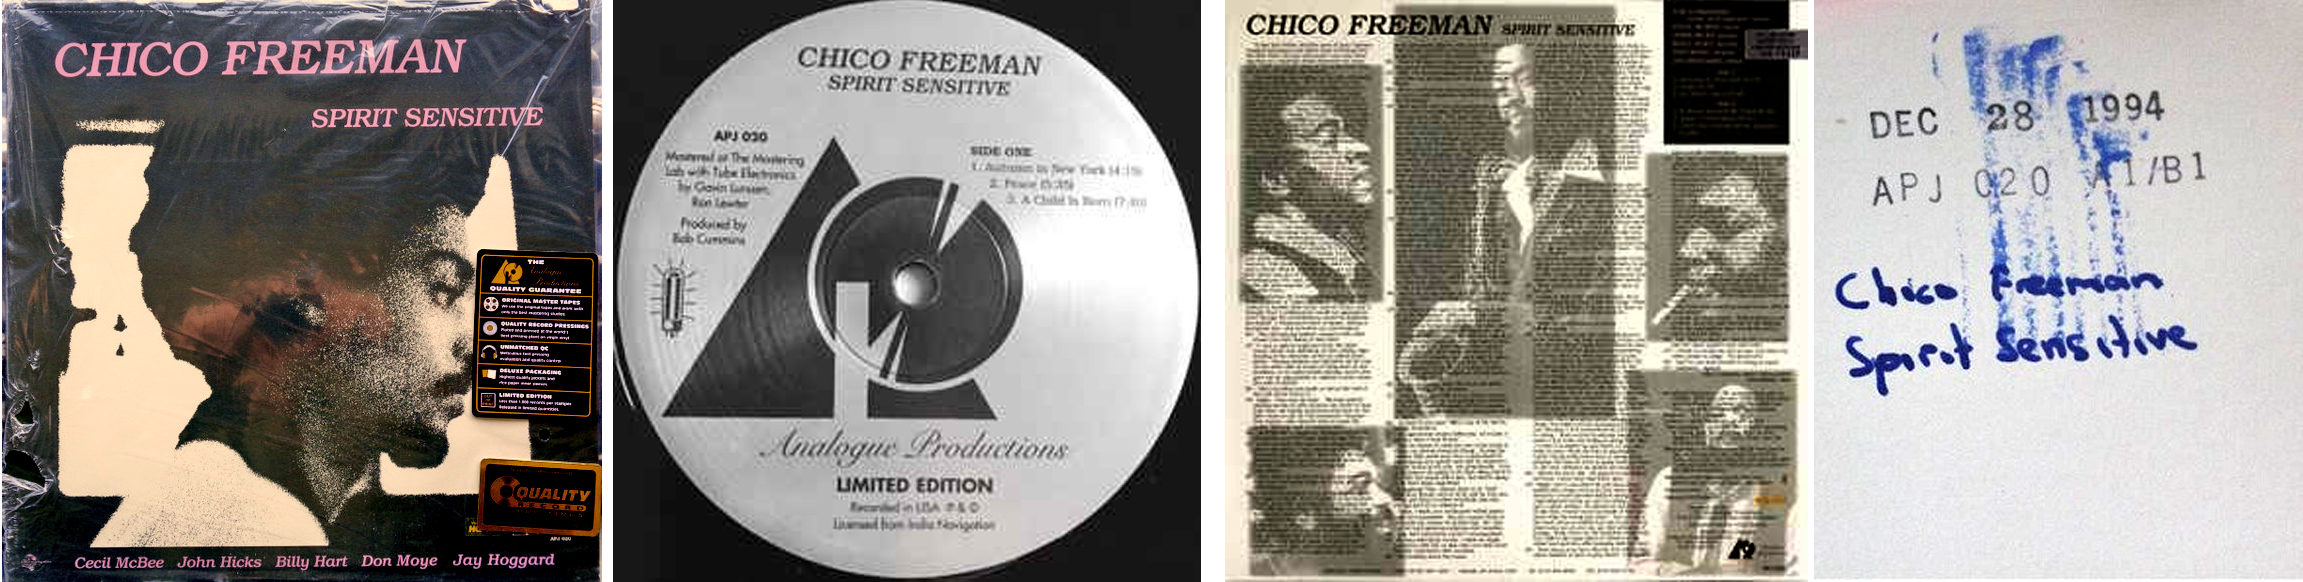 Chico Freeman: Spirit Sensitive (1979) India Navigation ...